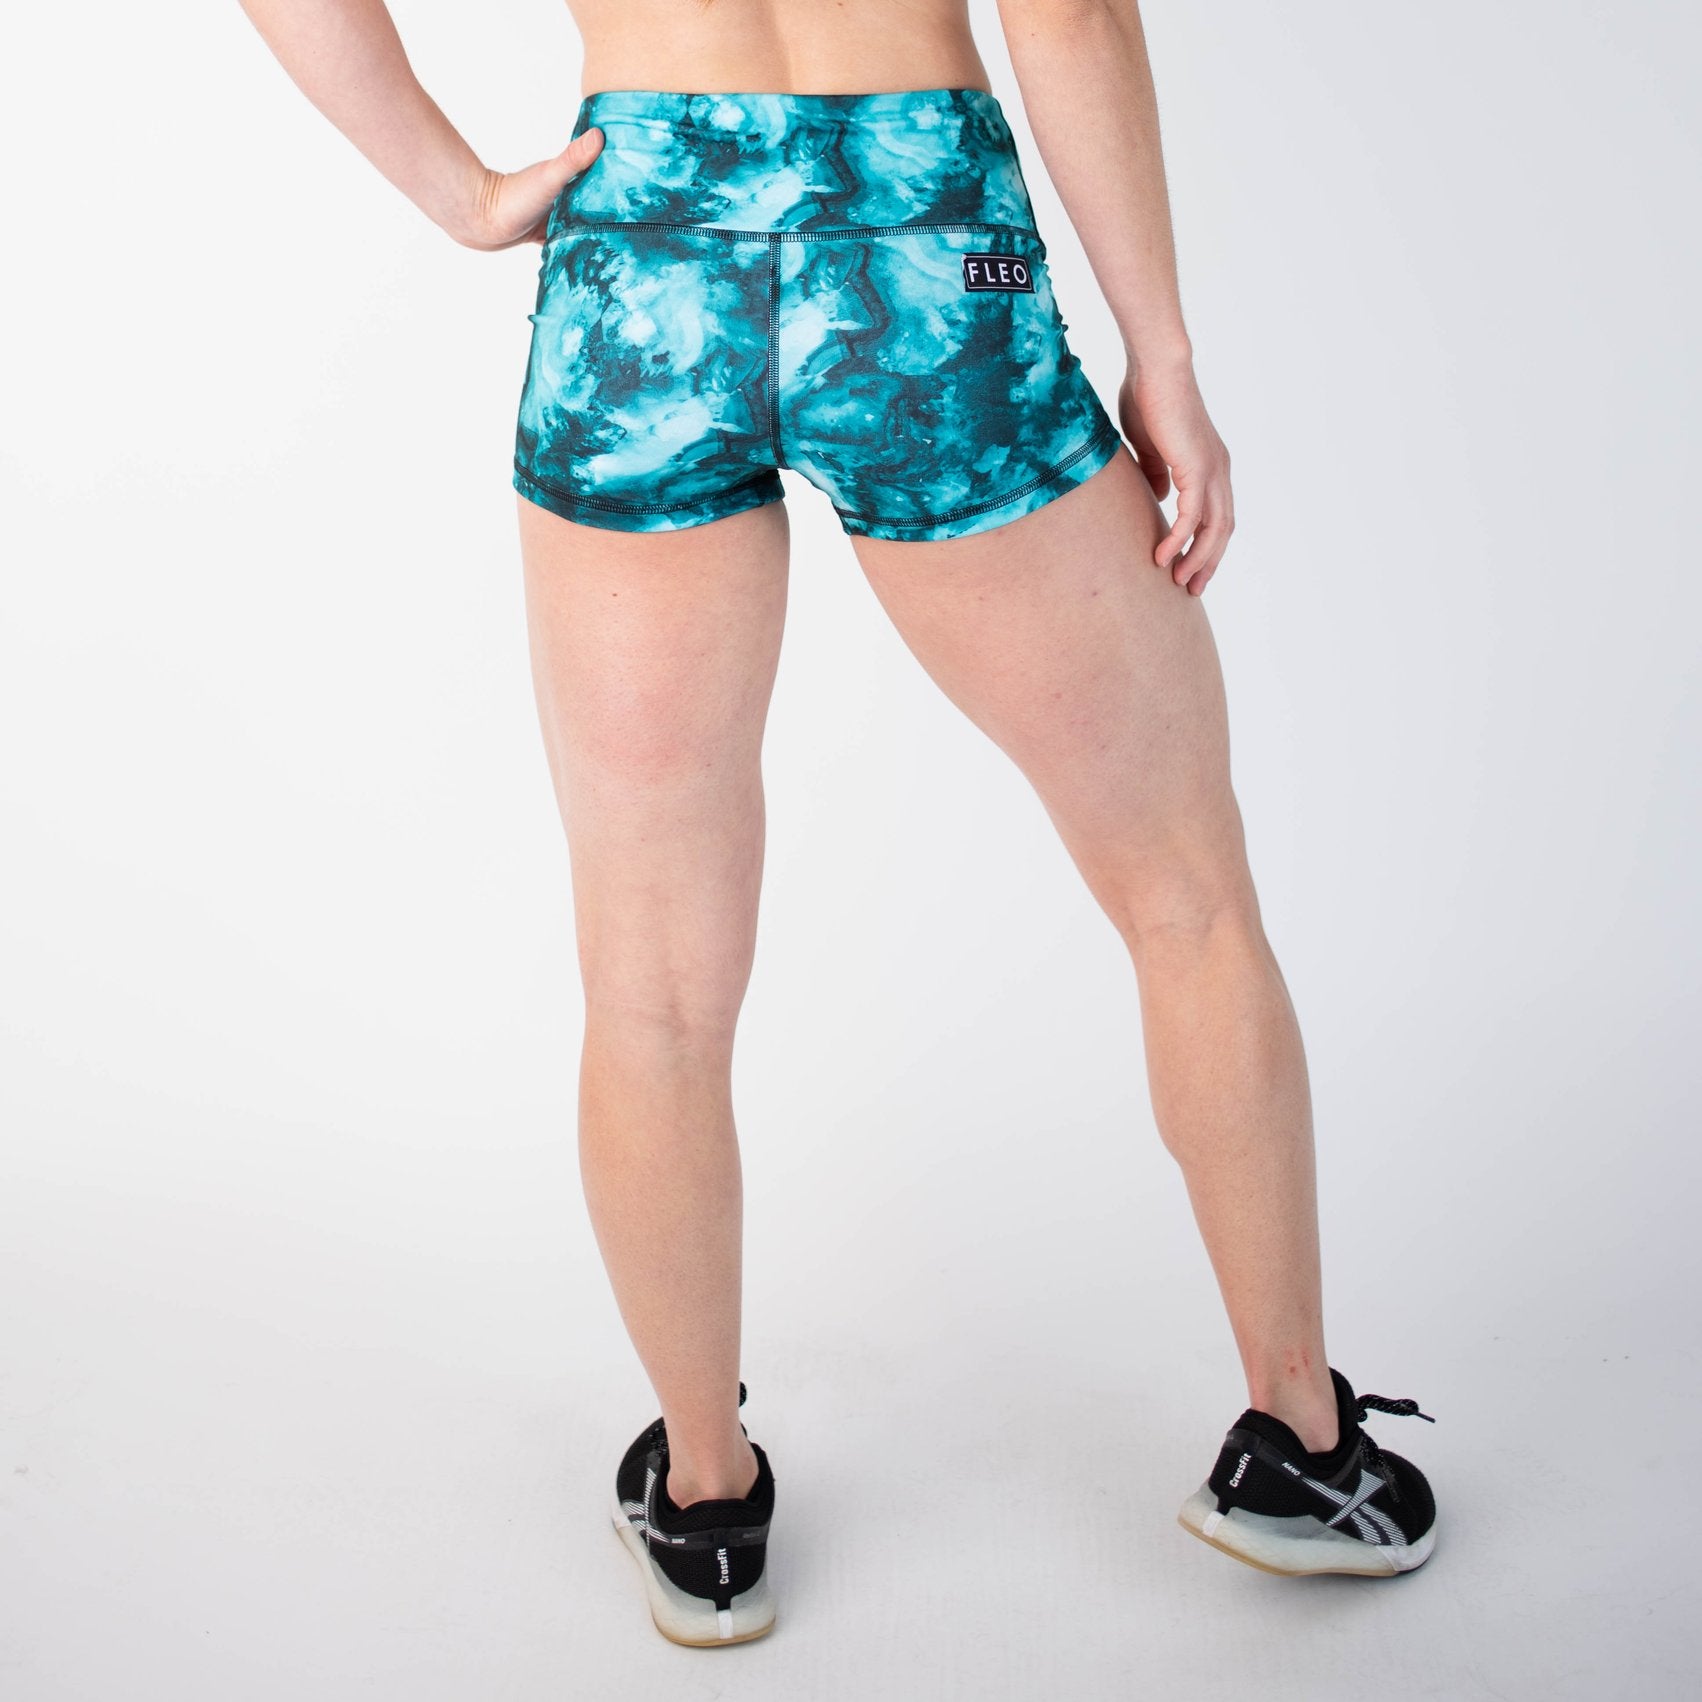 FLEO Turquoise Stone Shorts (High-rise Original) - 9 for 9